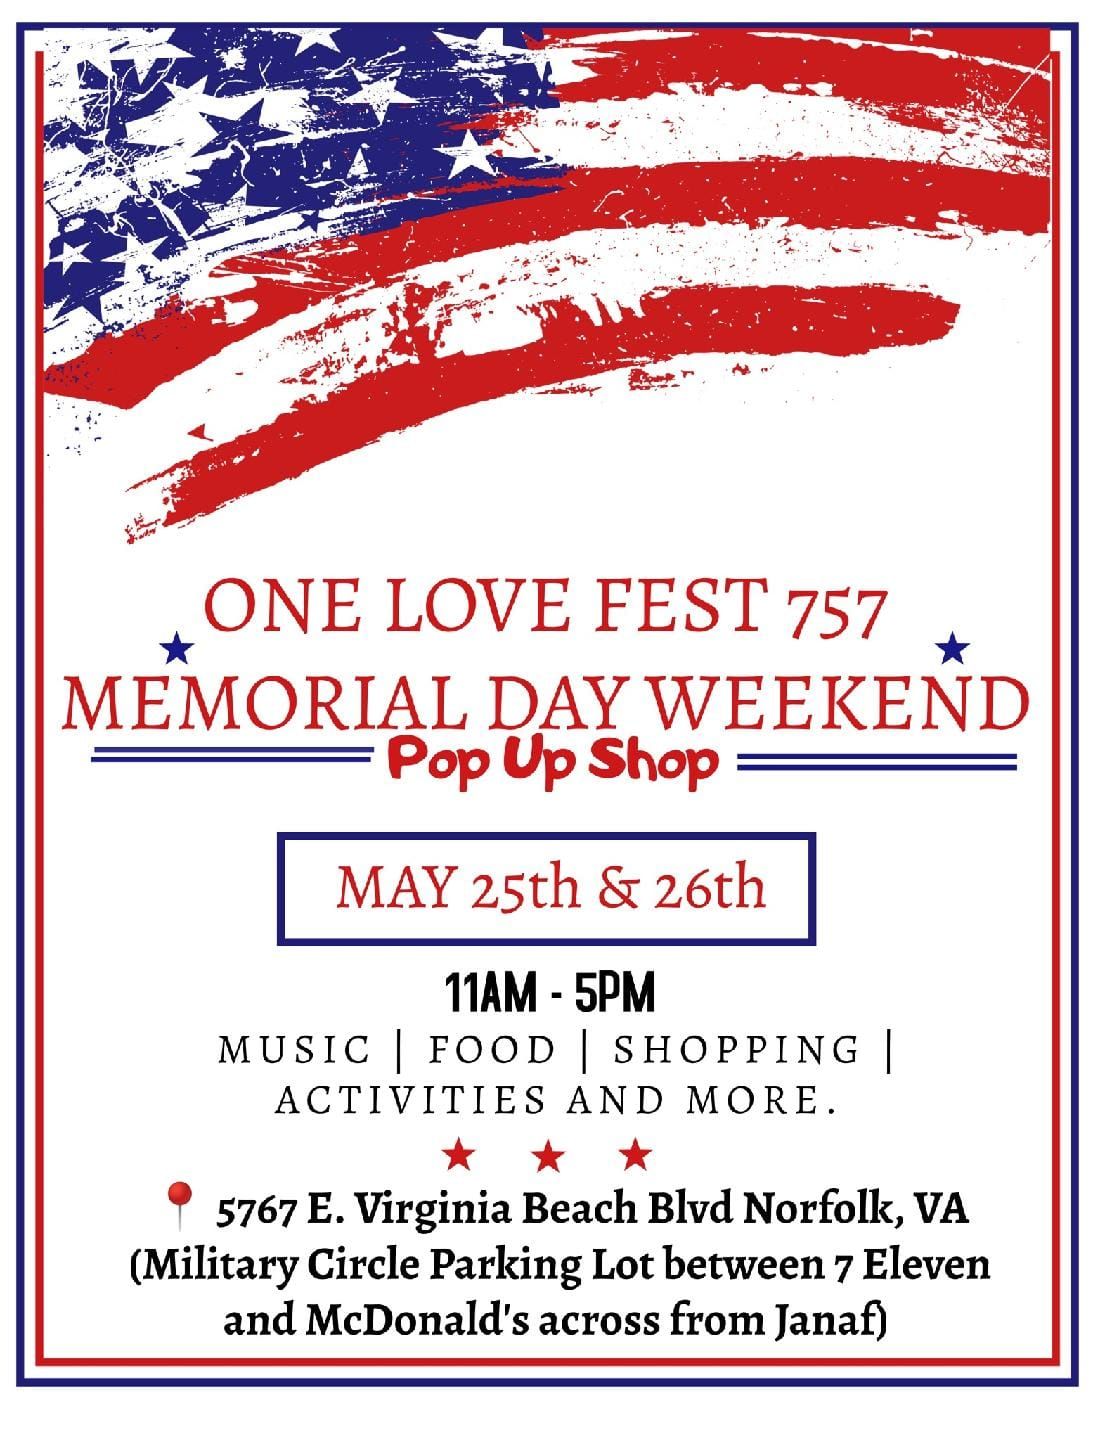 Memorial Day Weekend One Love Fest 757 Pop Up Shop 